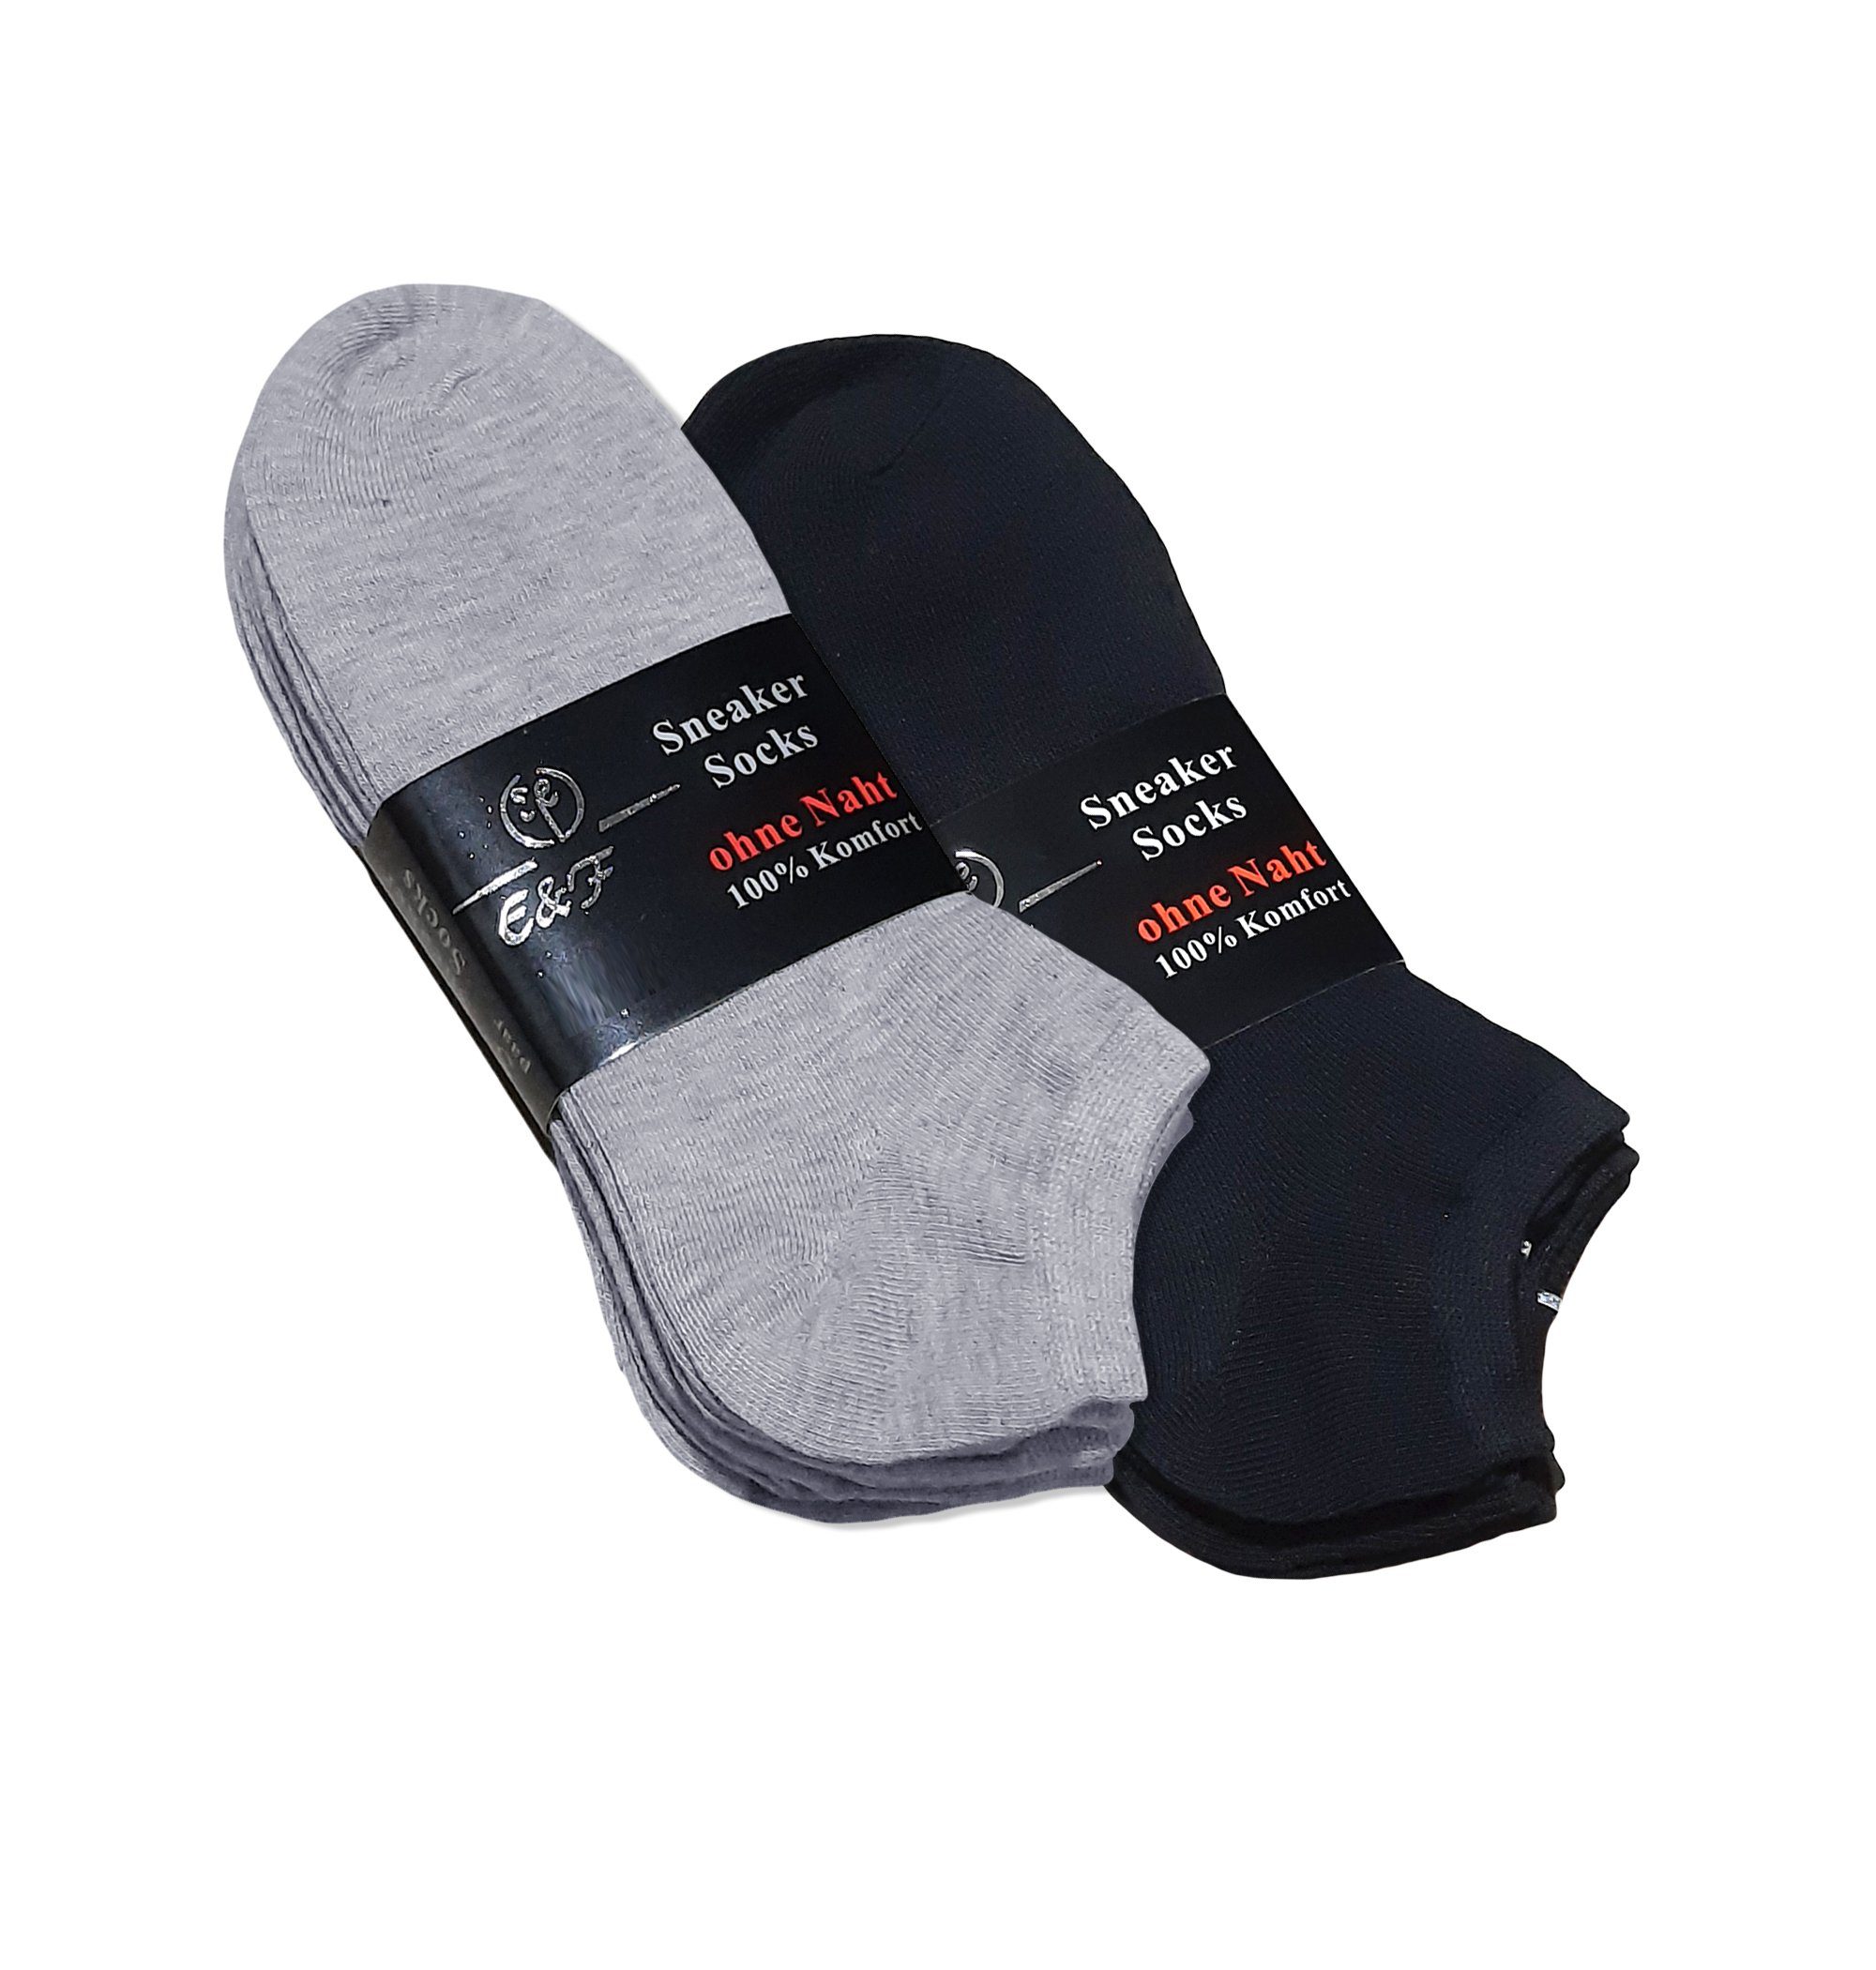 Sockenhimmel Sneakersocken Socken für Damen leichte Sommersocken kurze Sportsocken in Basic Farben (10 Paar) maschinengekettelte Naht (sehr flach) Mix (Schwarz/Grau)